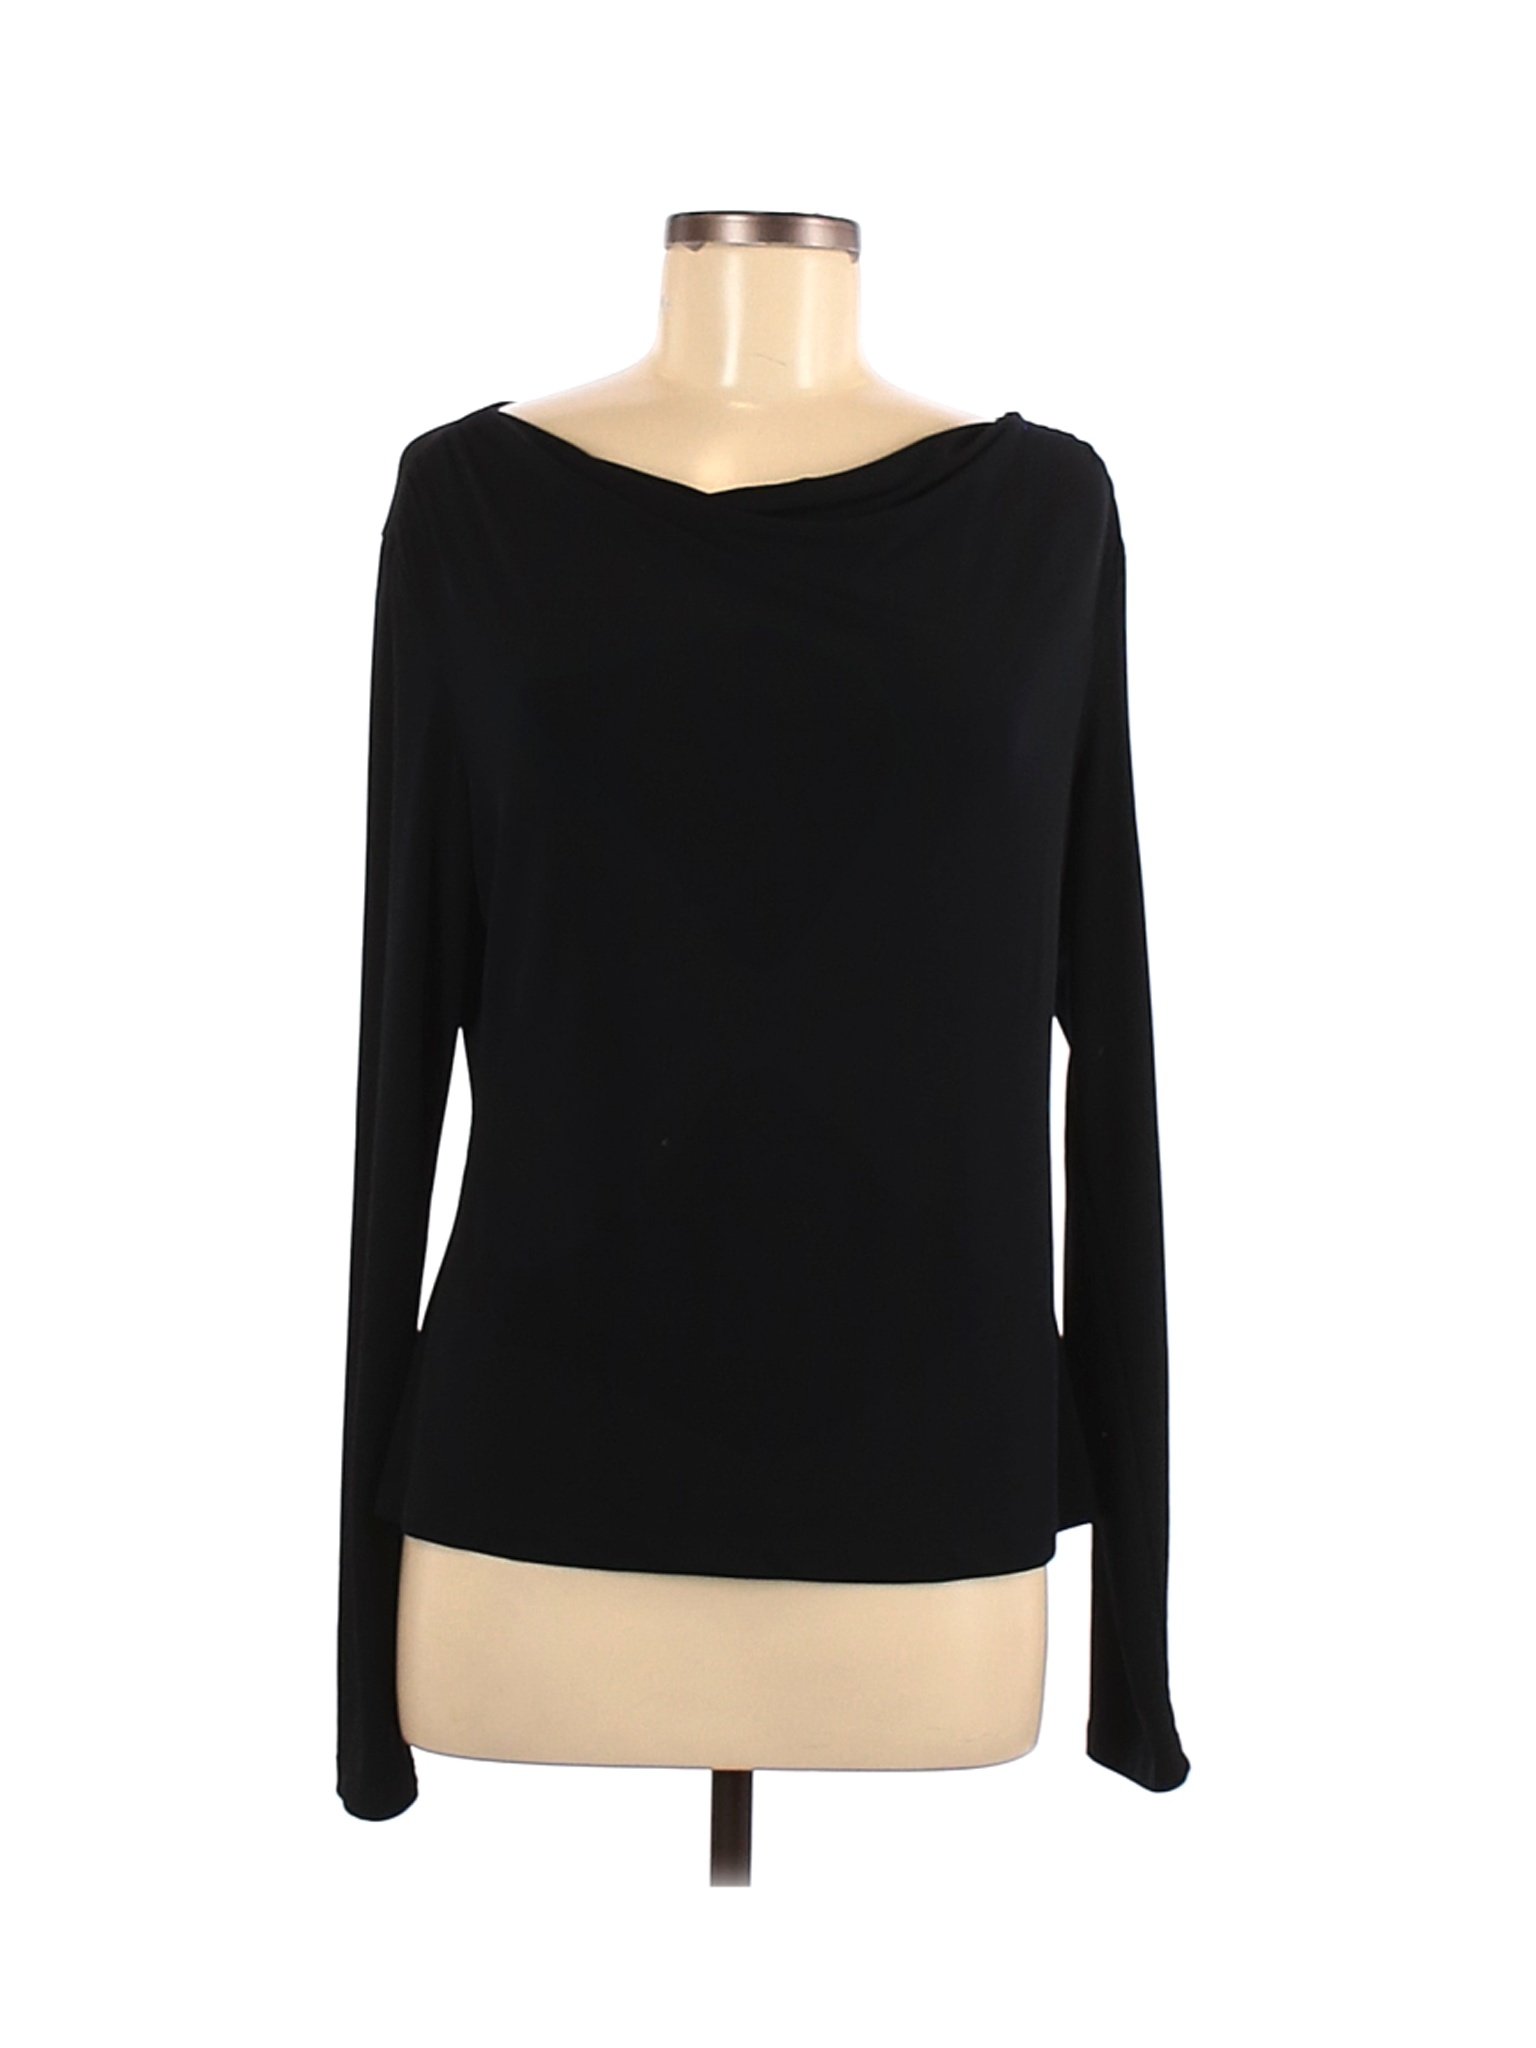 New York & Company Women Black Long Sleeve Top M | eBay